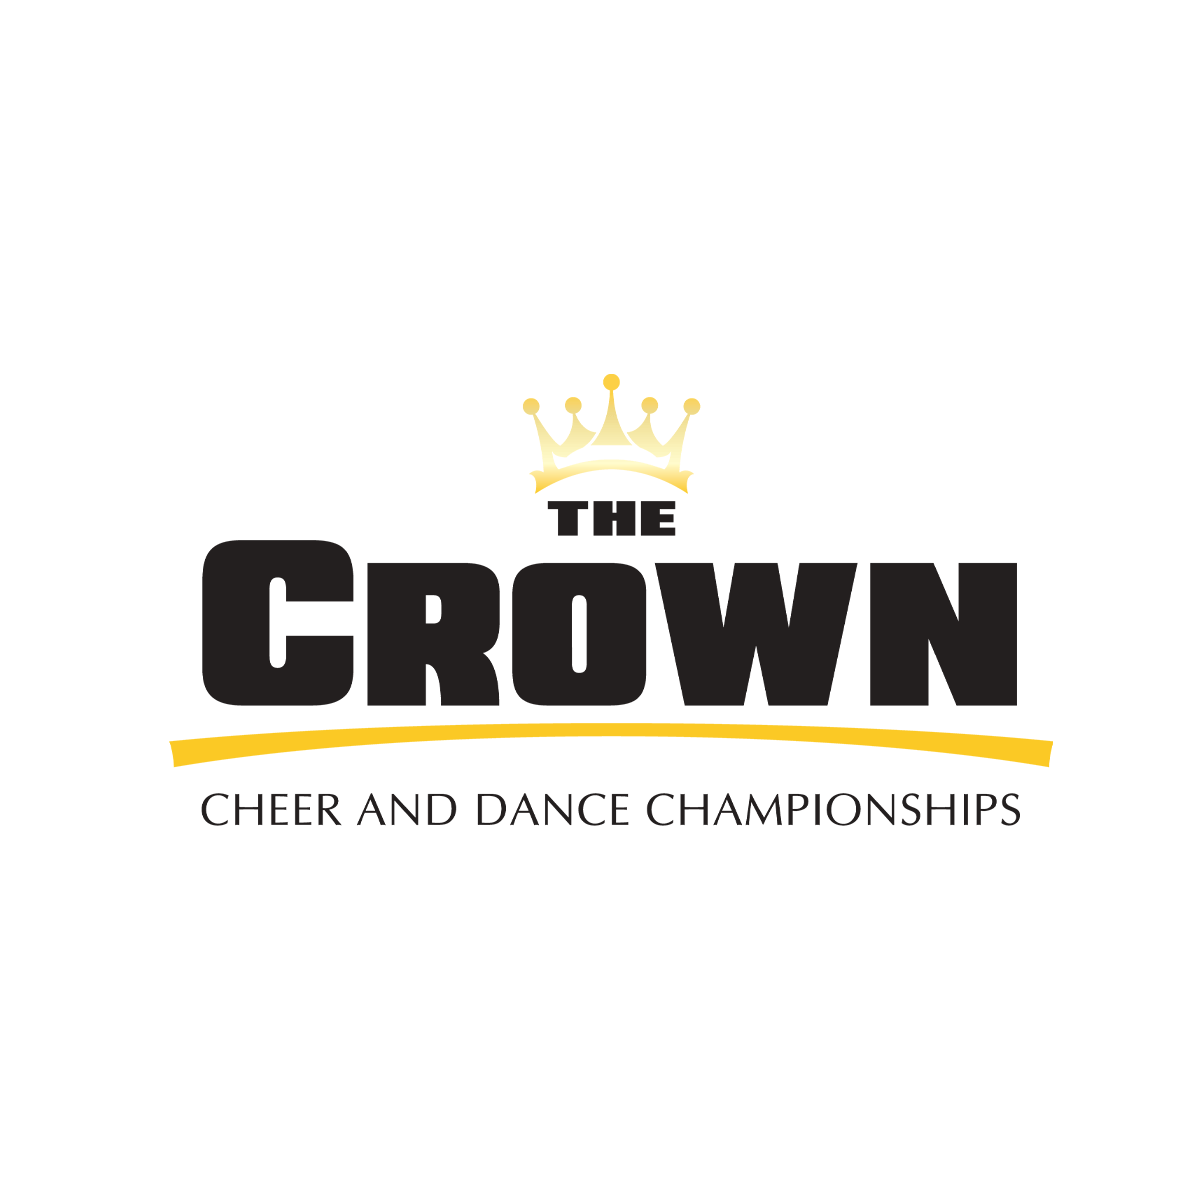 The Northeast Crown Championship